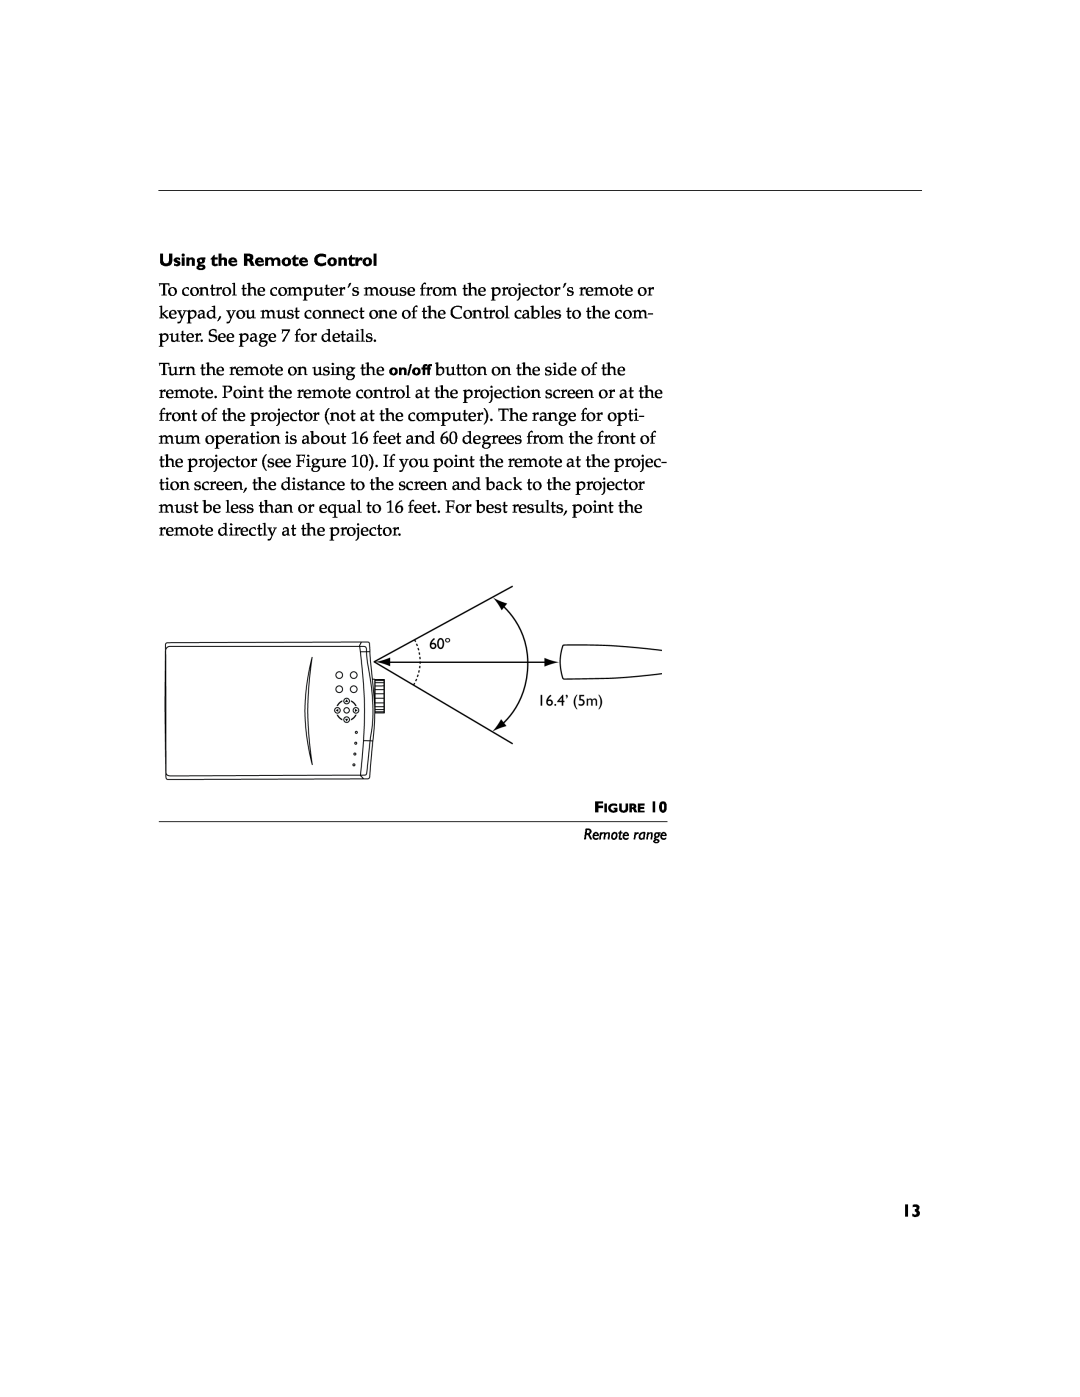 InFocus LP260 manual Using the Remote Control, Remote range 